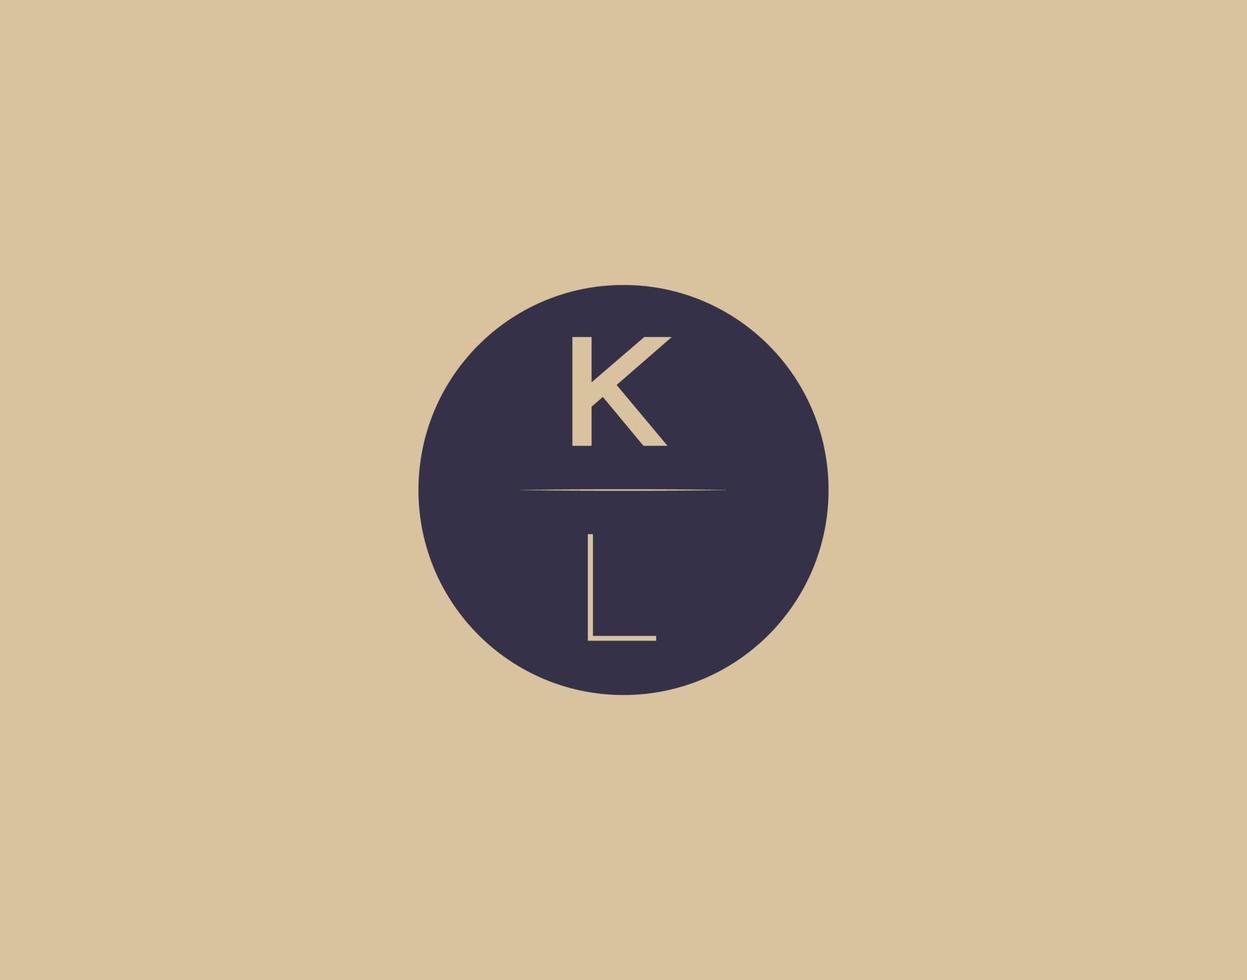 KL letter modern elegant logo design vector images